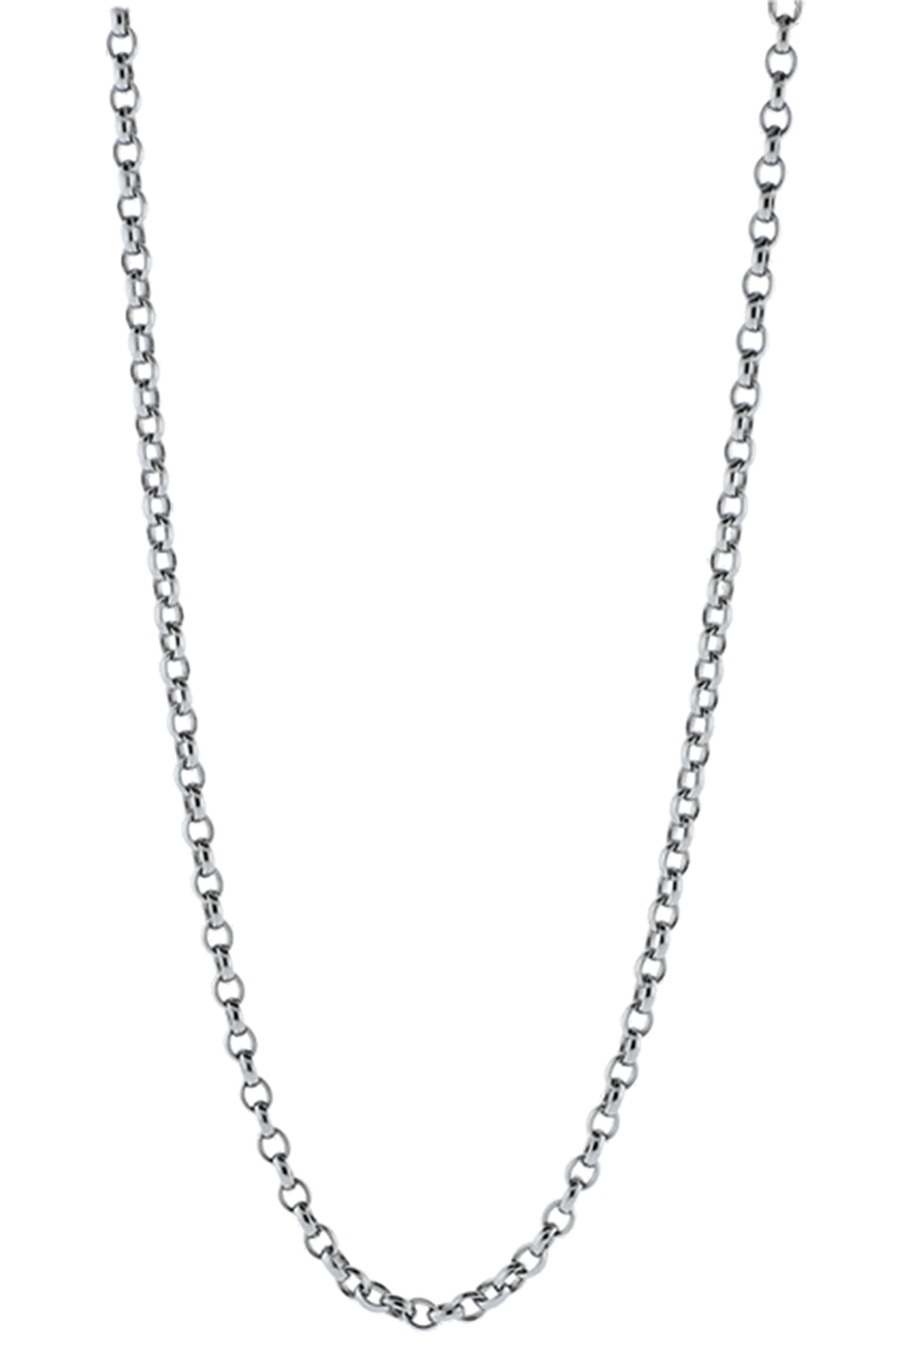 TAMARA COMOLLI-Belchor Chain Necklace-WHITE GOLD